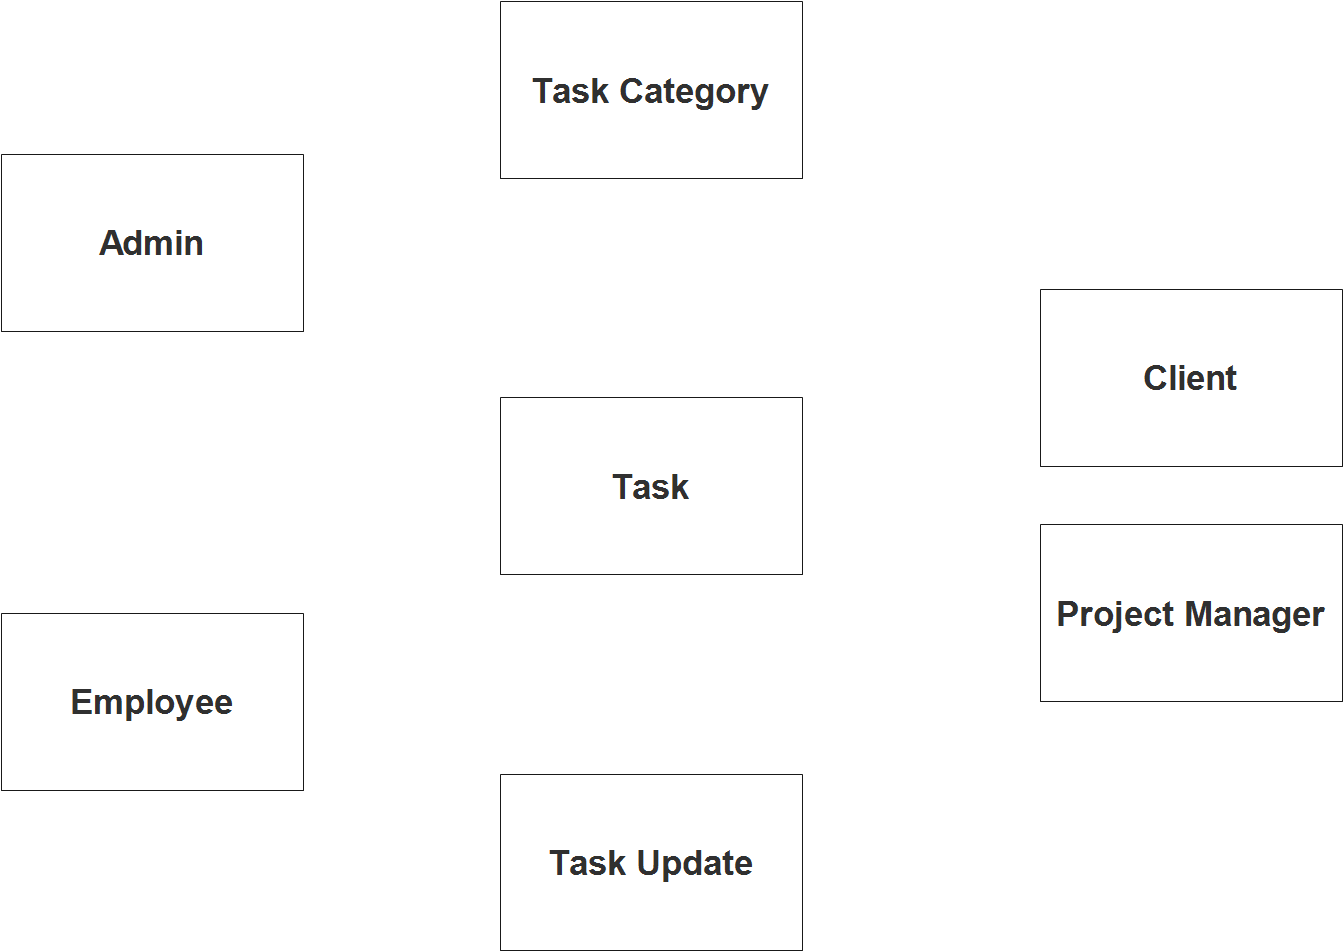 Task Management System ER Diagram - Step 1 Identify Entities